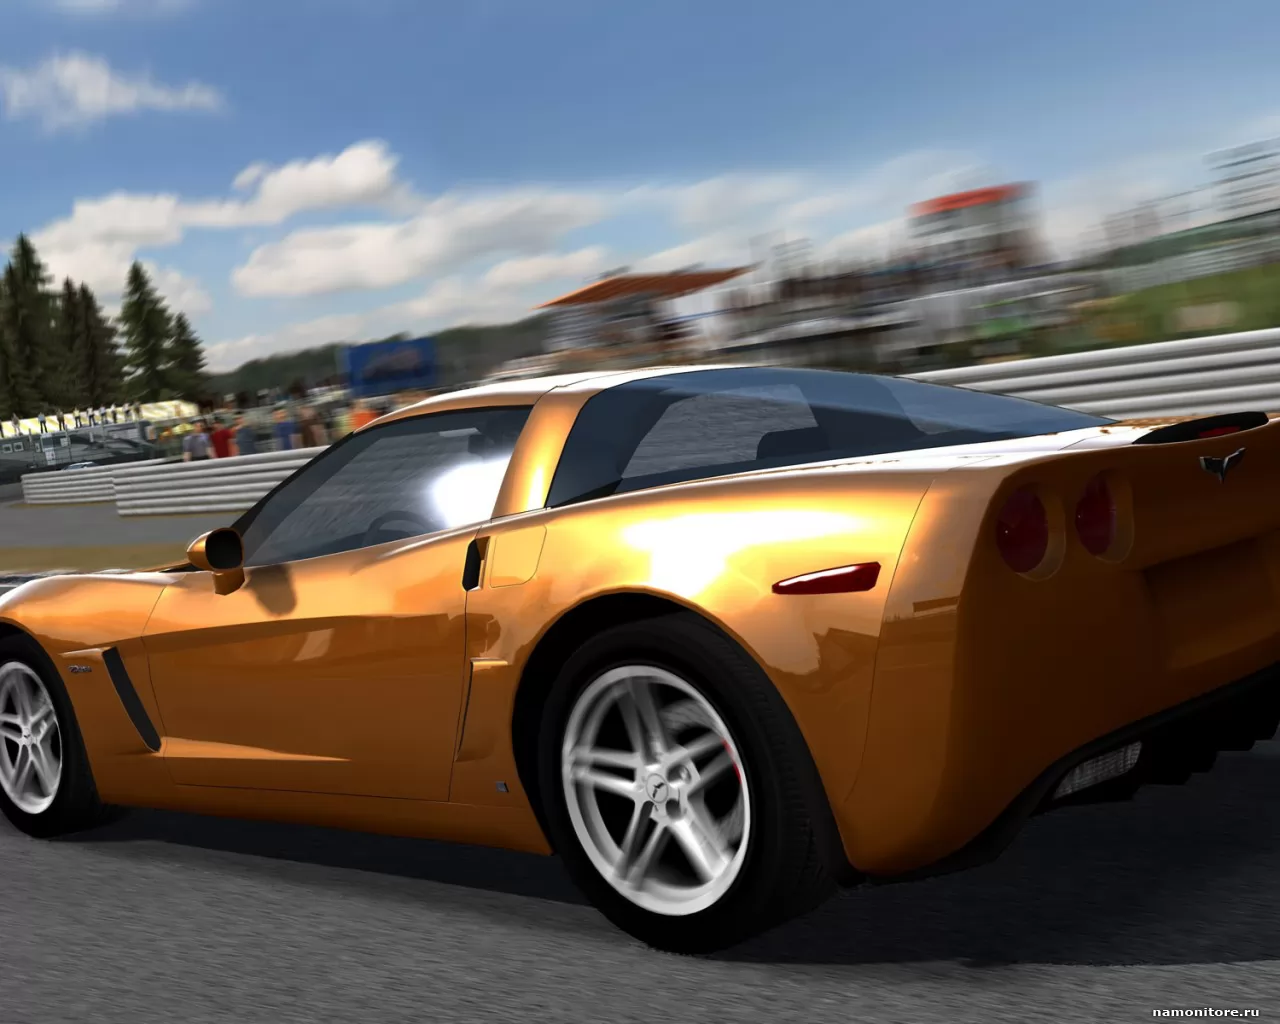 Forza Motorsport 2 